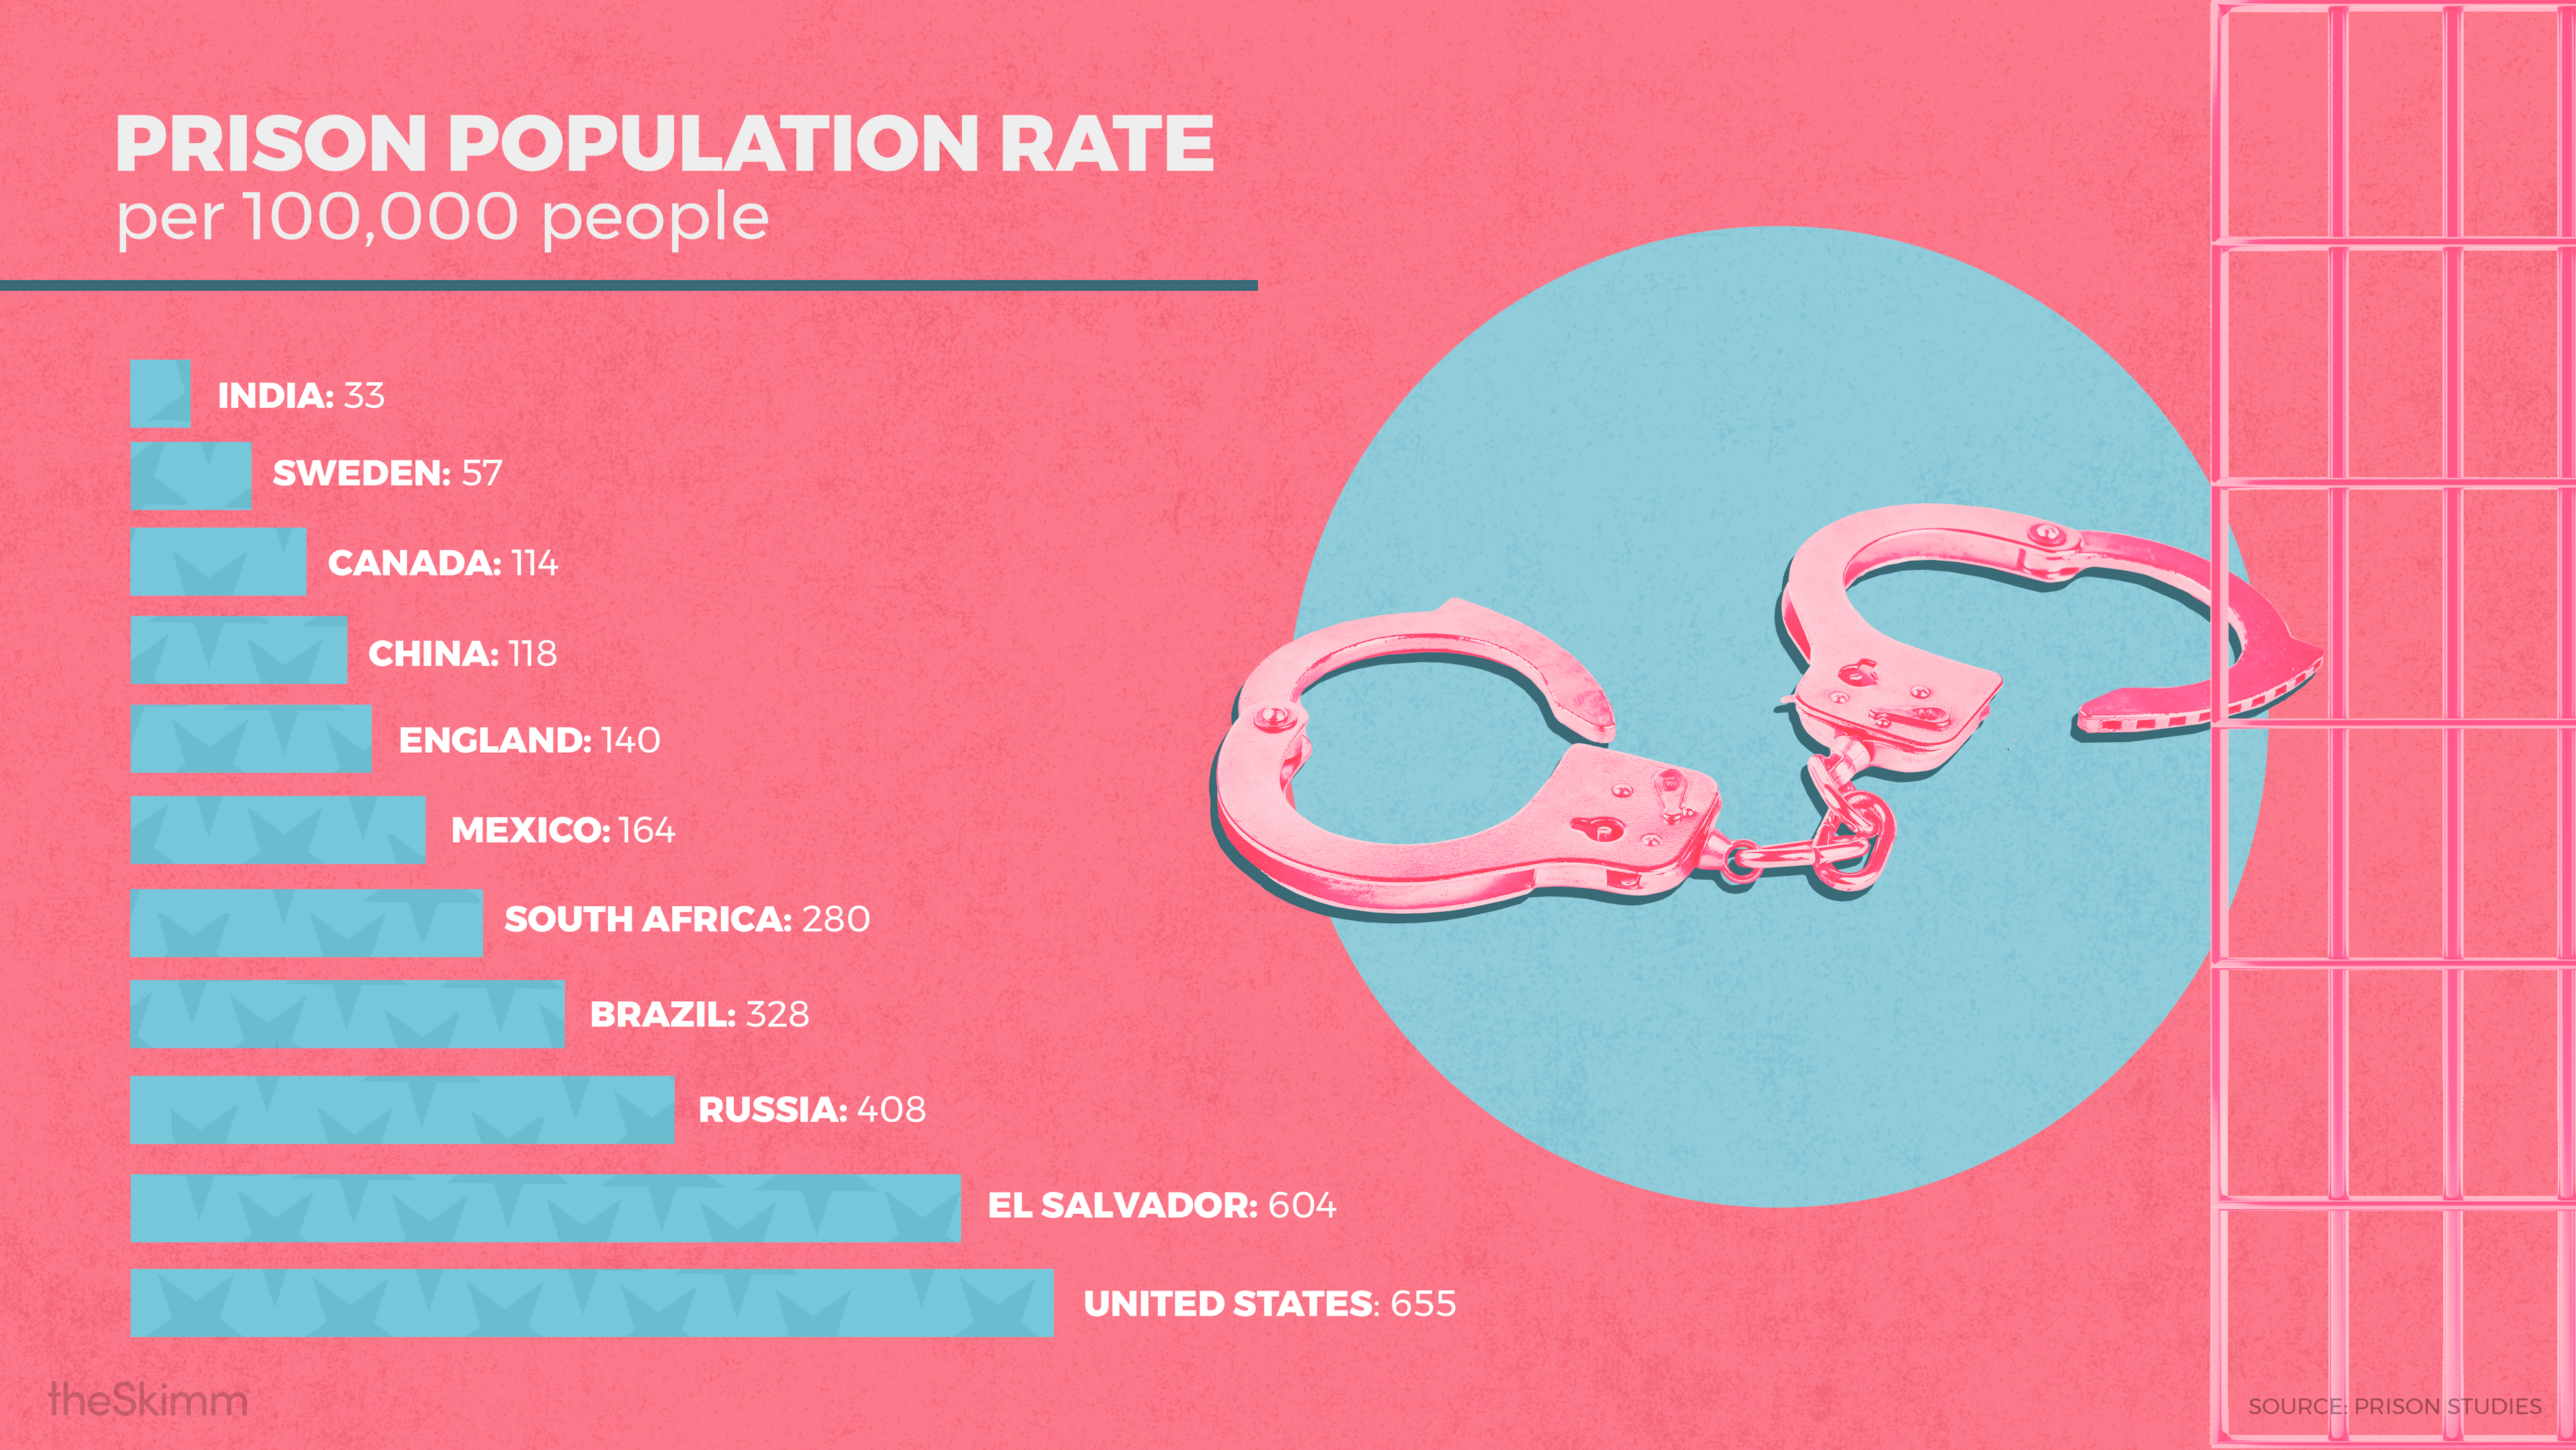 Prison Population Rate per 100,000 people